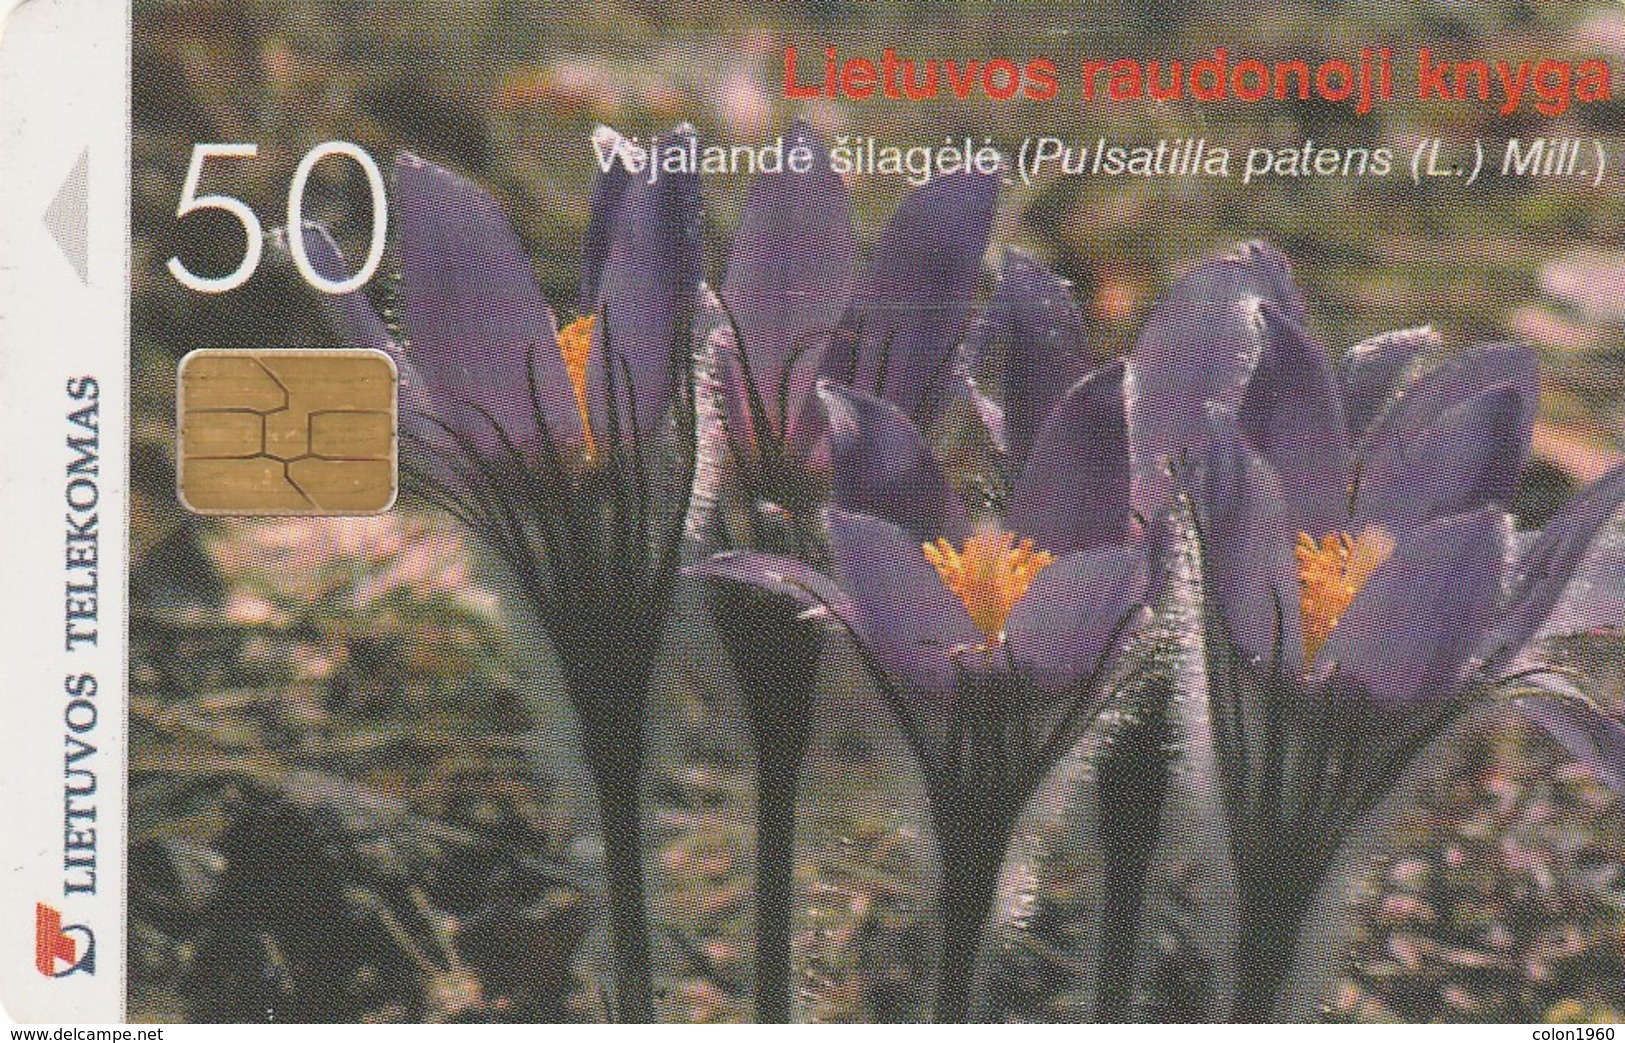 LITUANIA. CHIP. Pasque-Flower. LT-LTV-C043. (008). - Flores